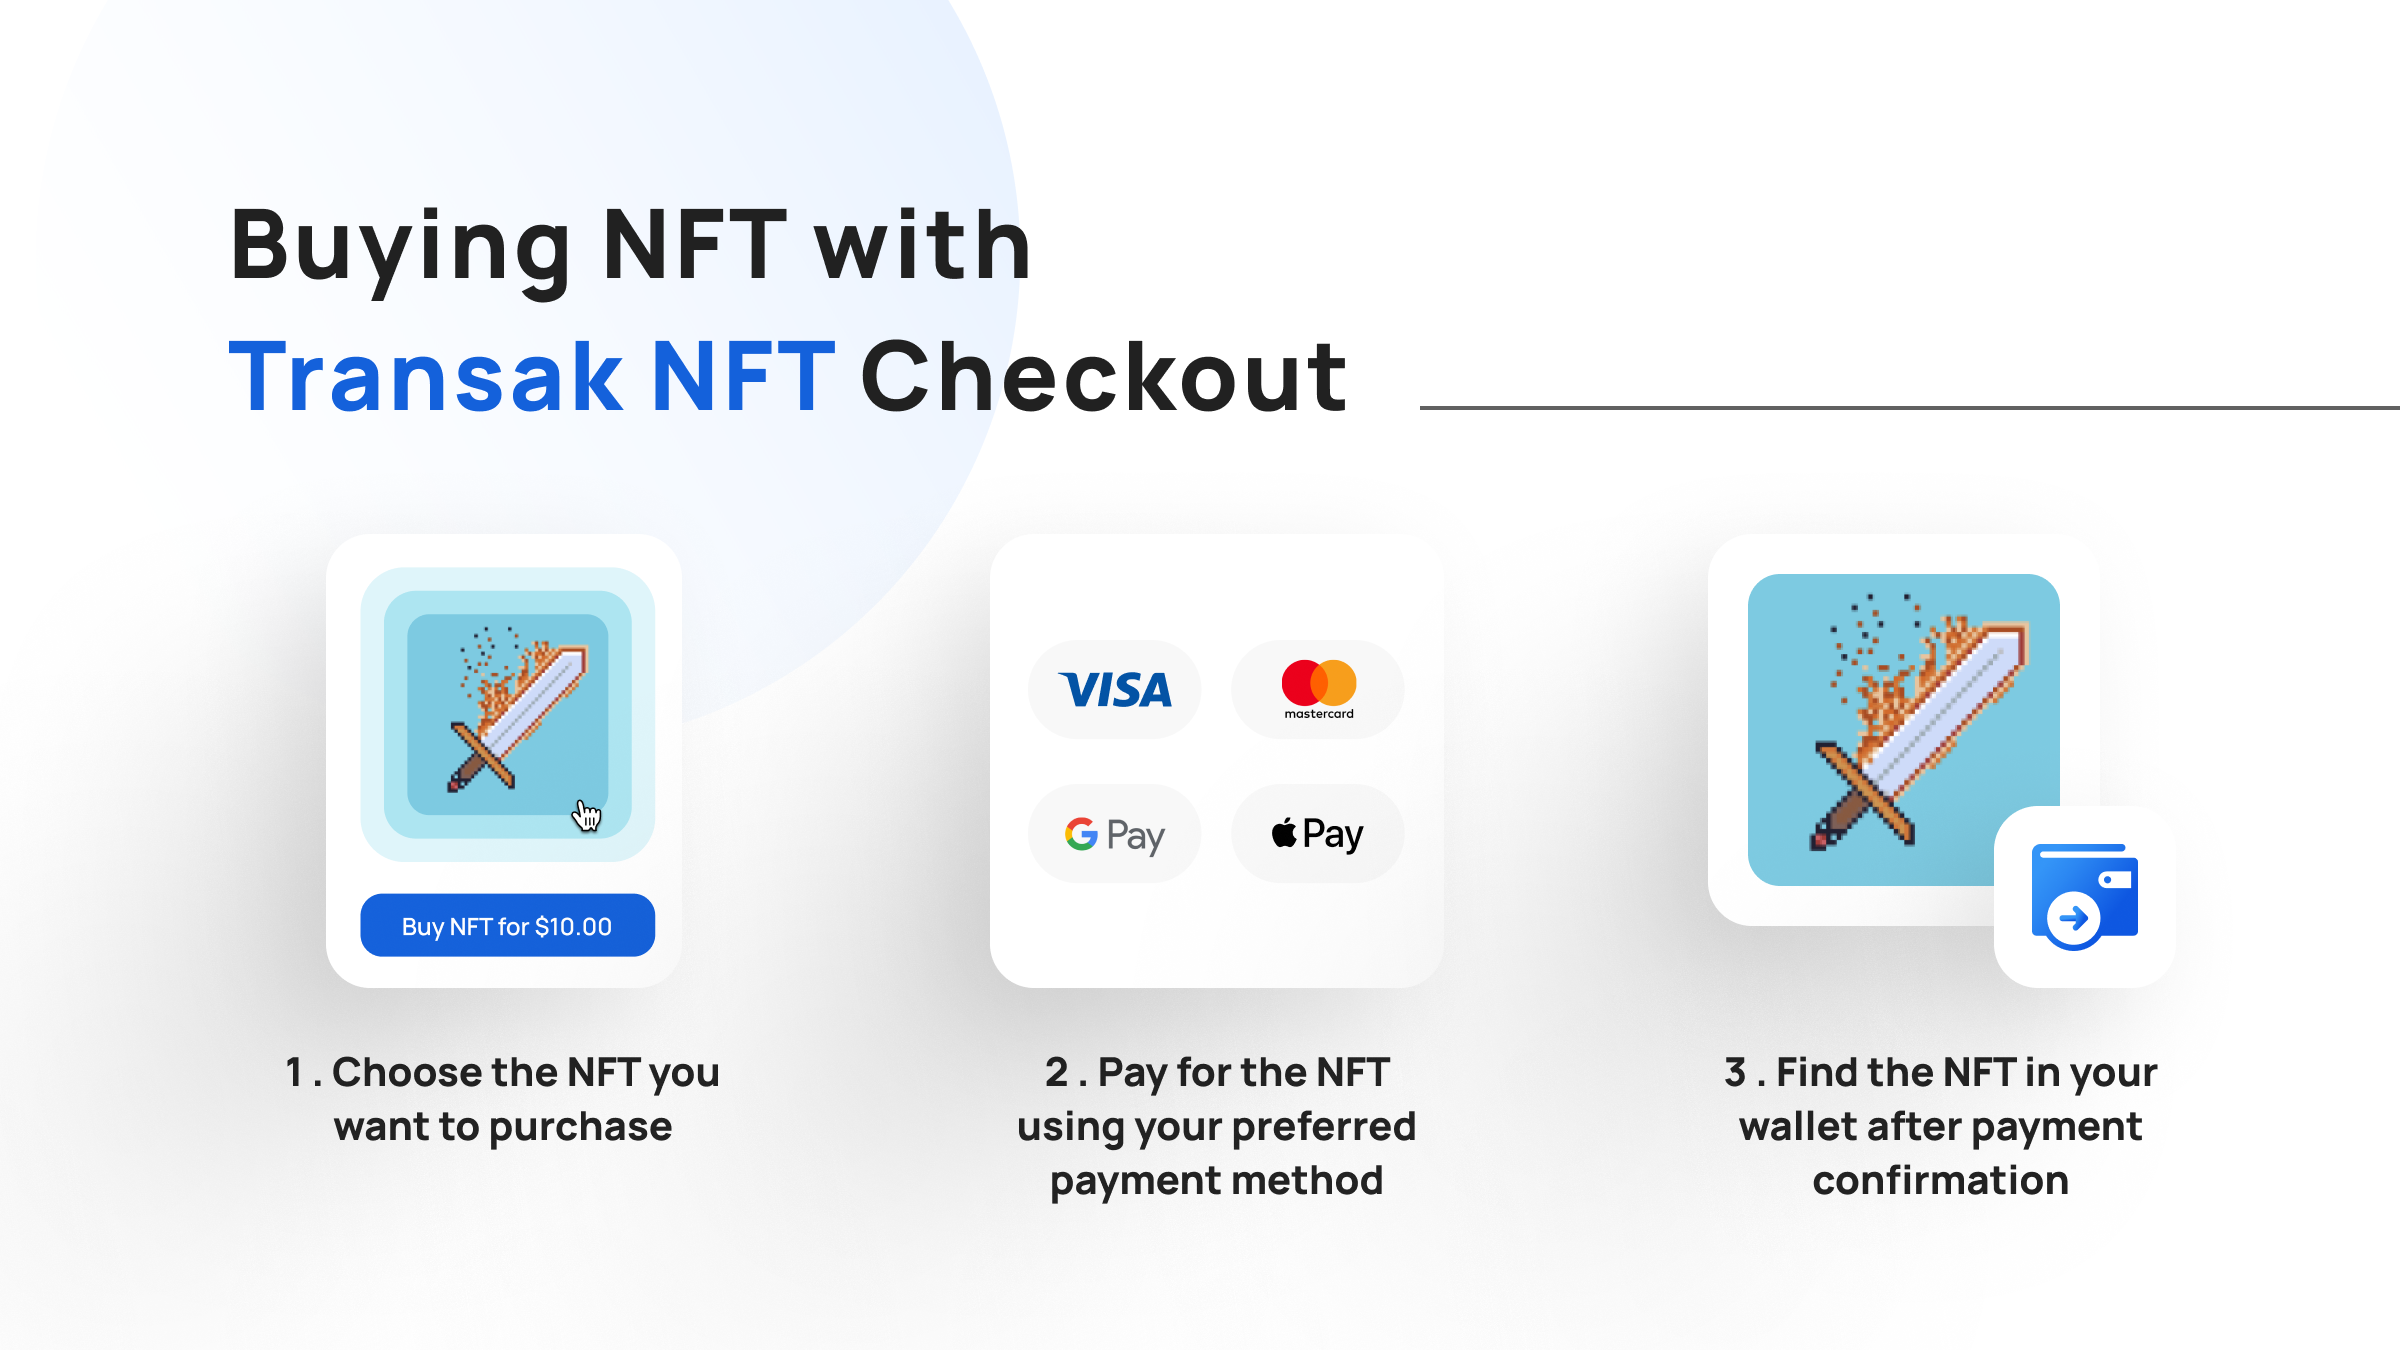 Buying NFT with Transak NFT Checkout